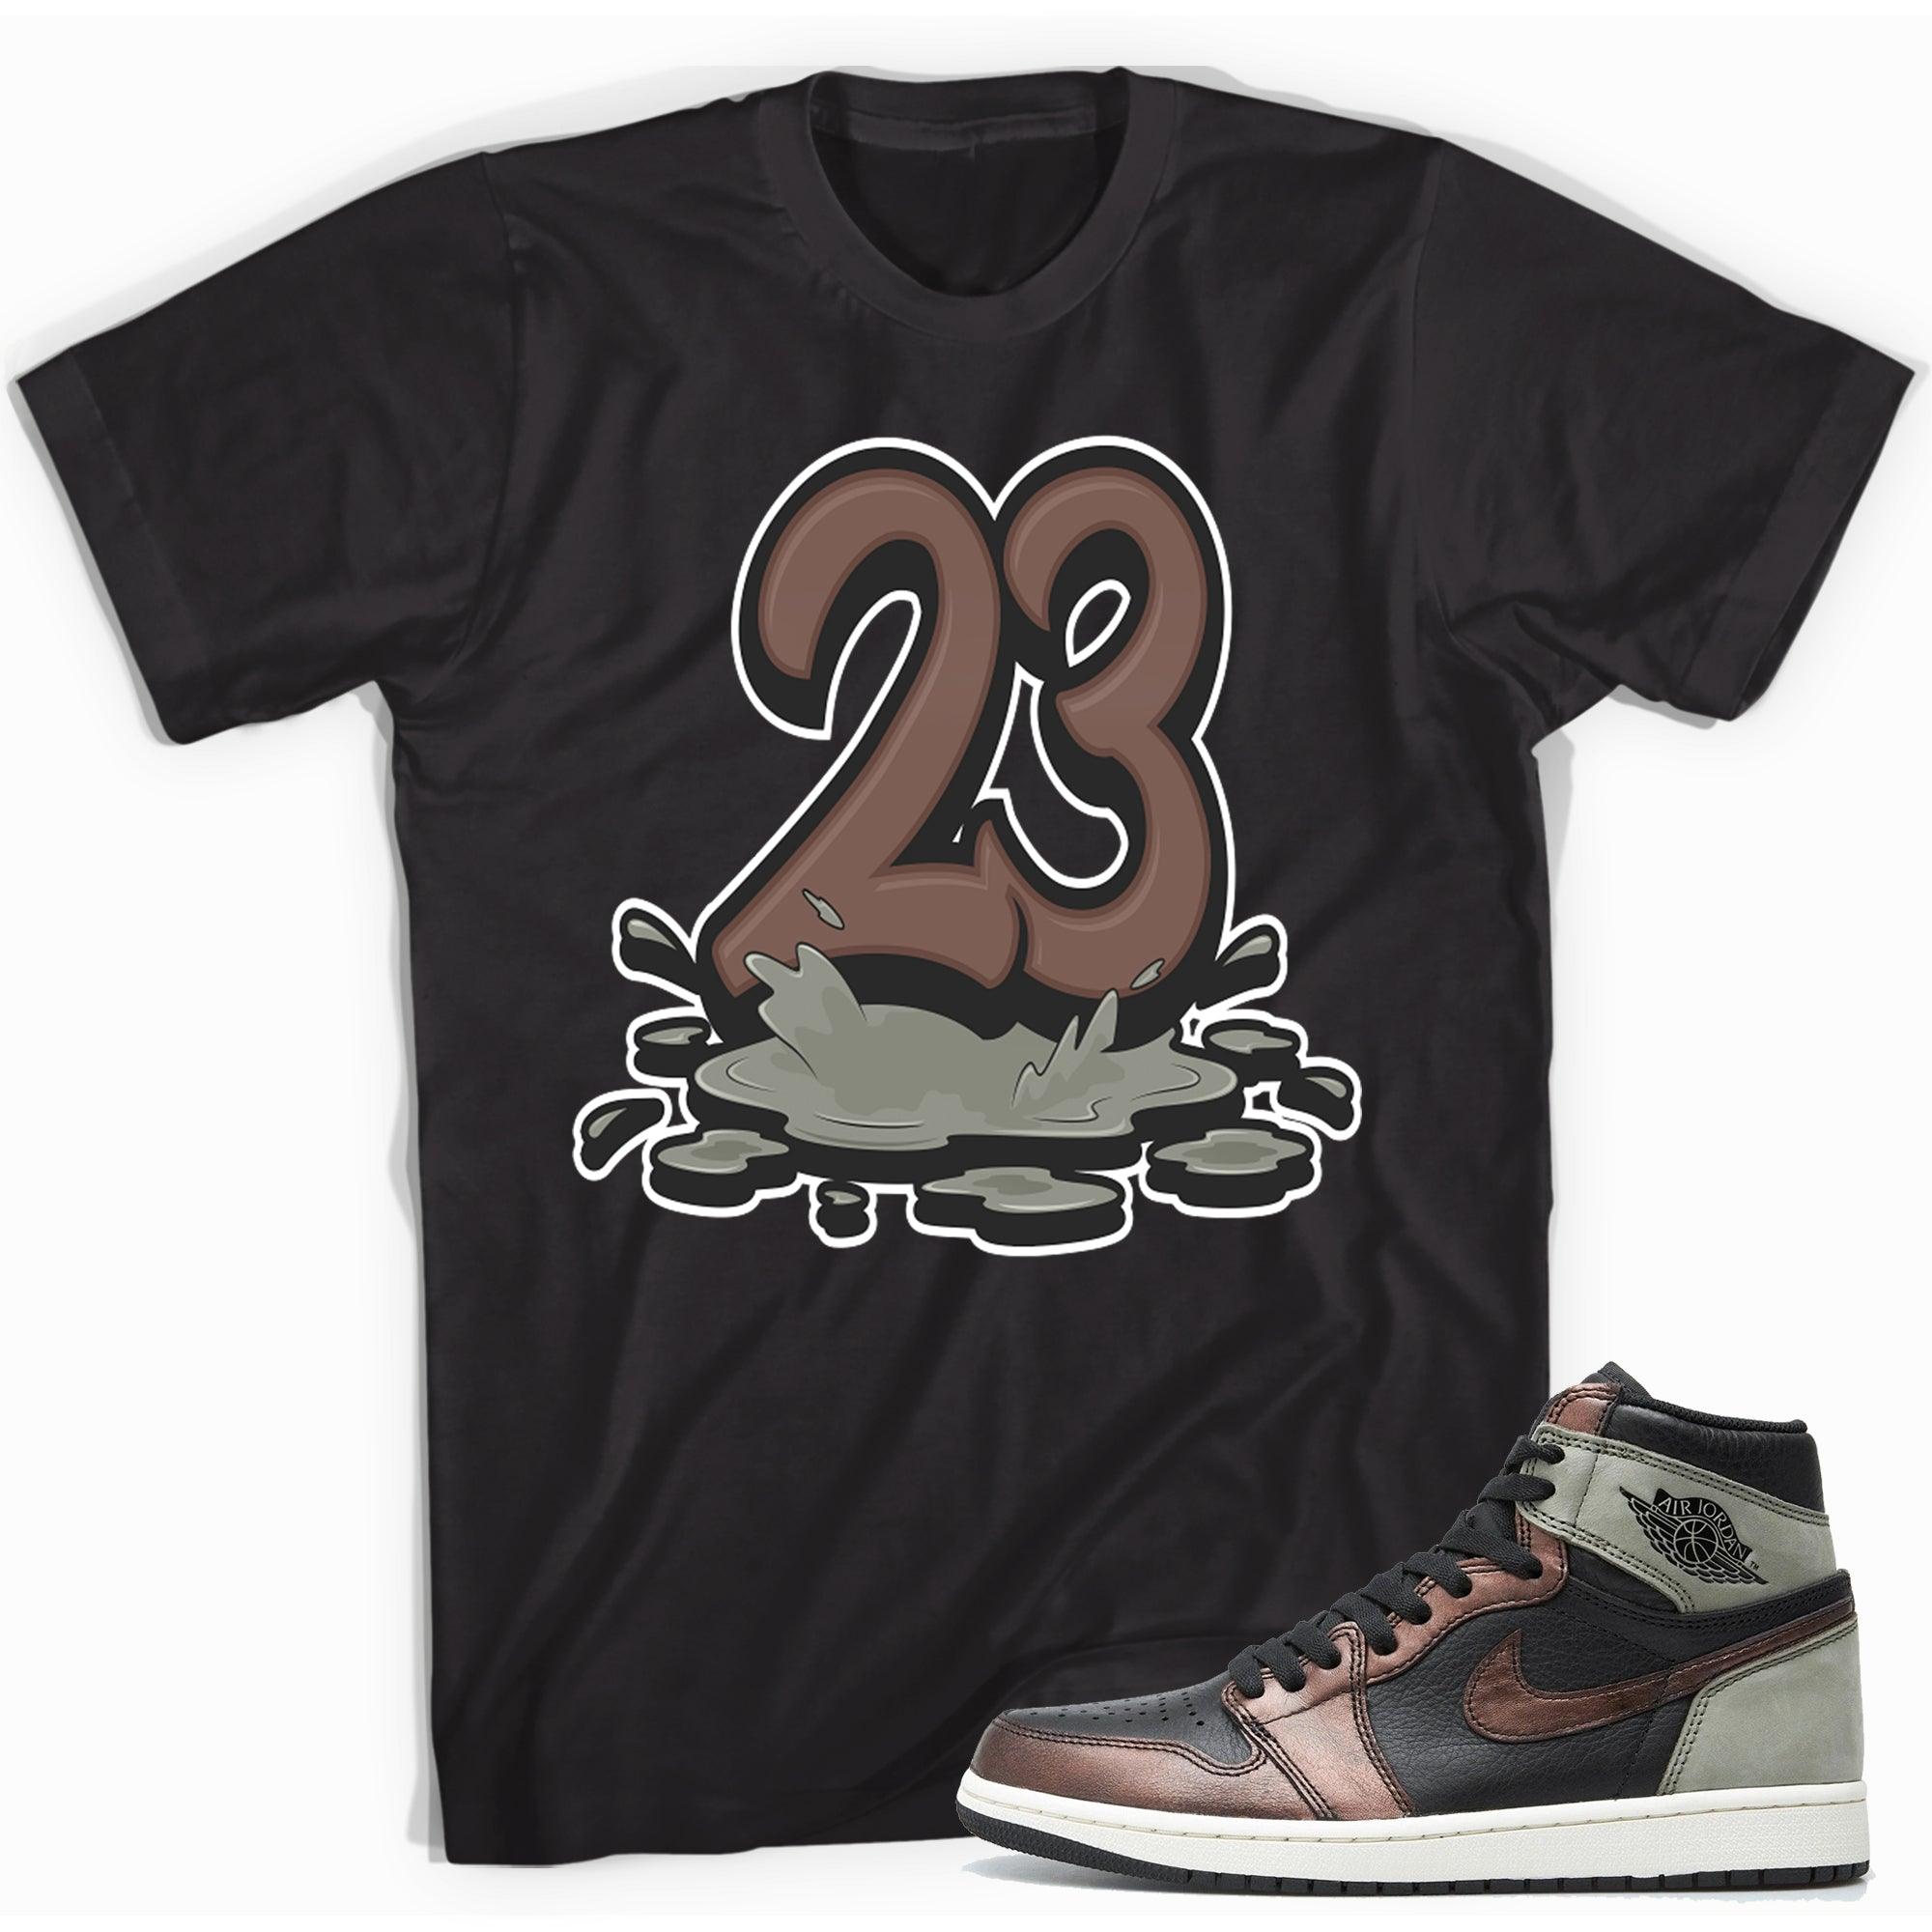 Number 23 Melting Shirt Air Jordan 1 Patina Sneakers photo